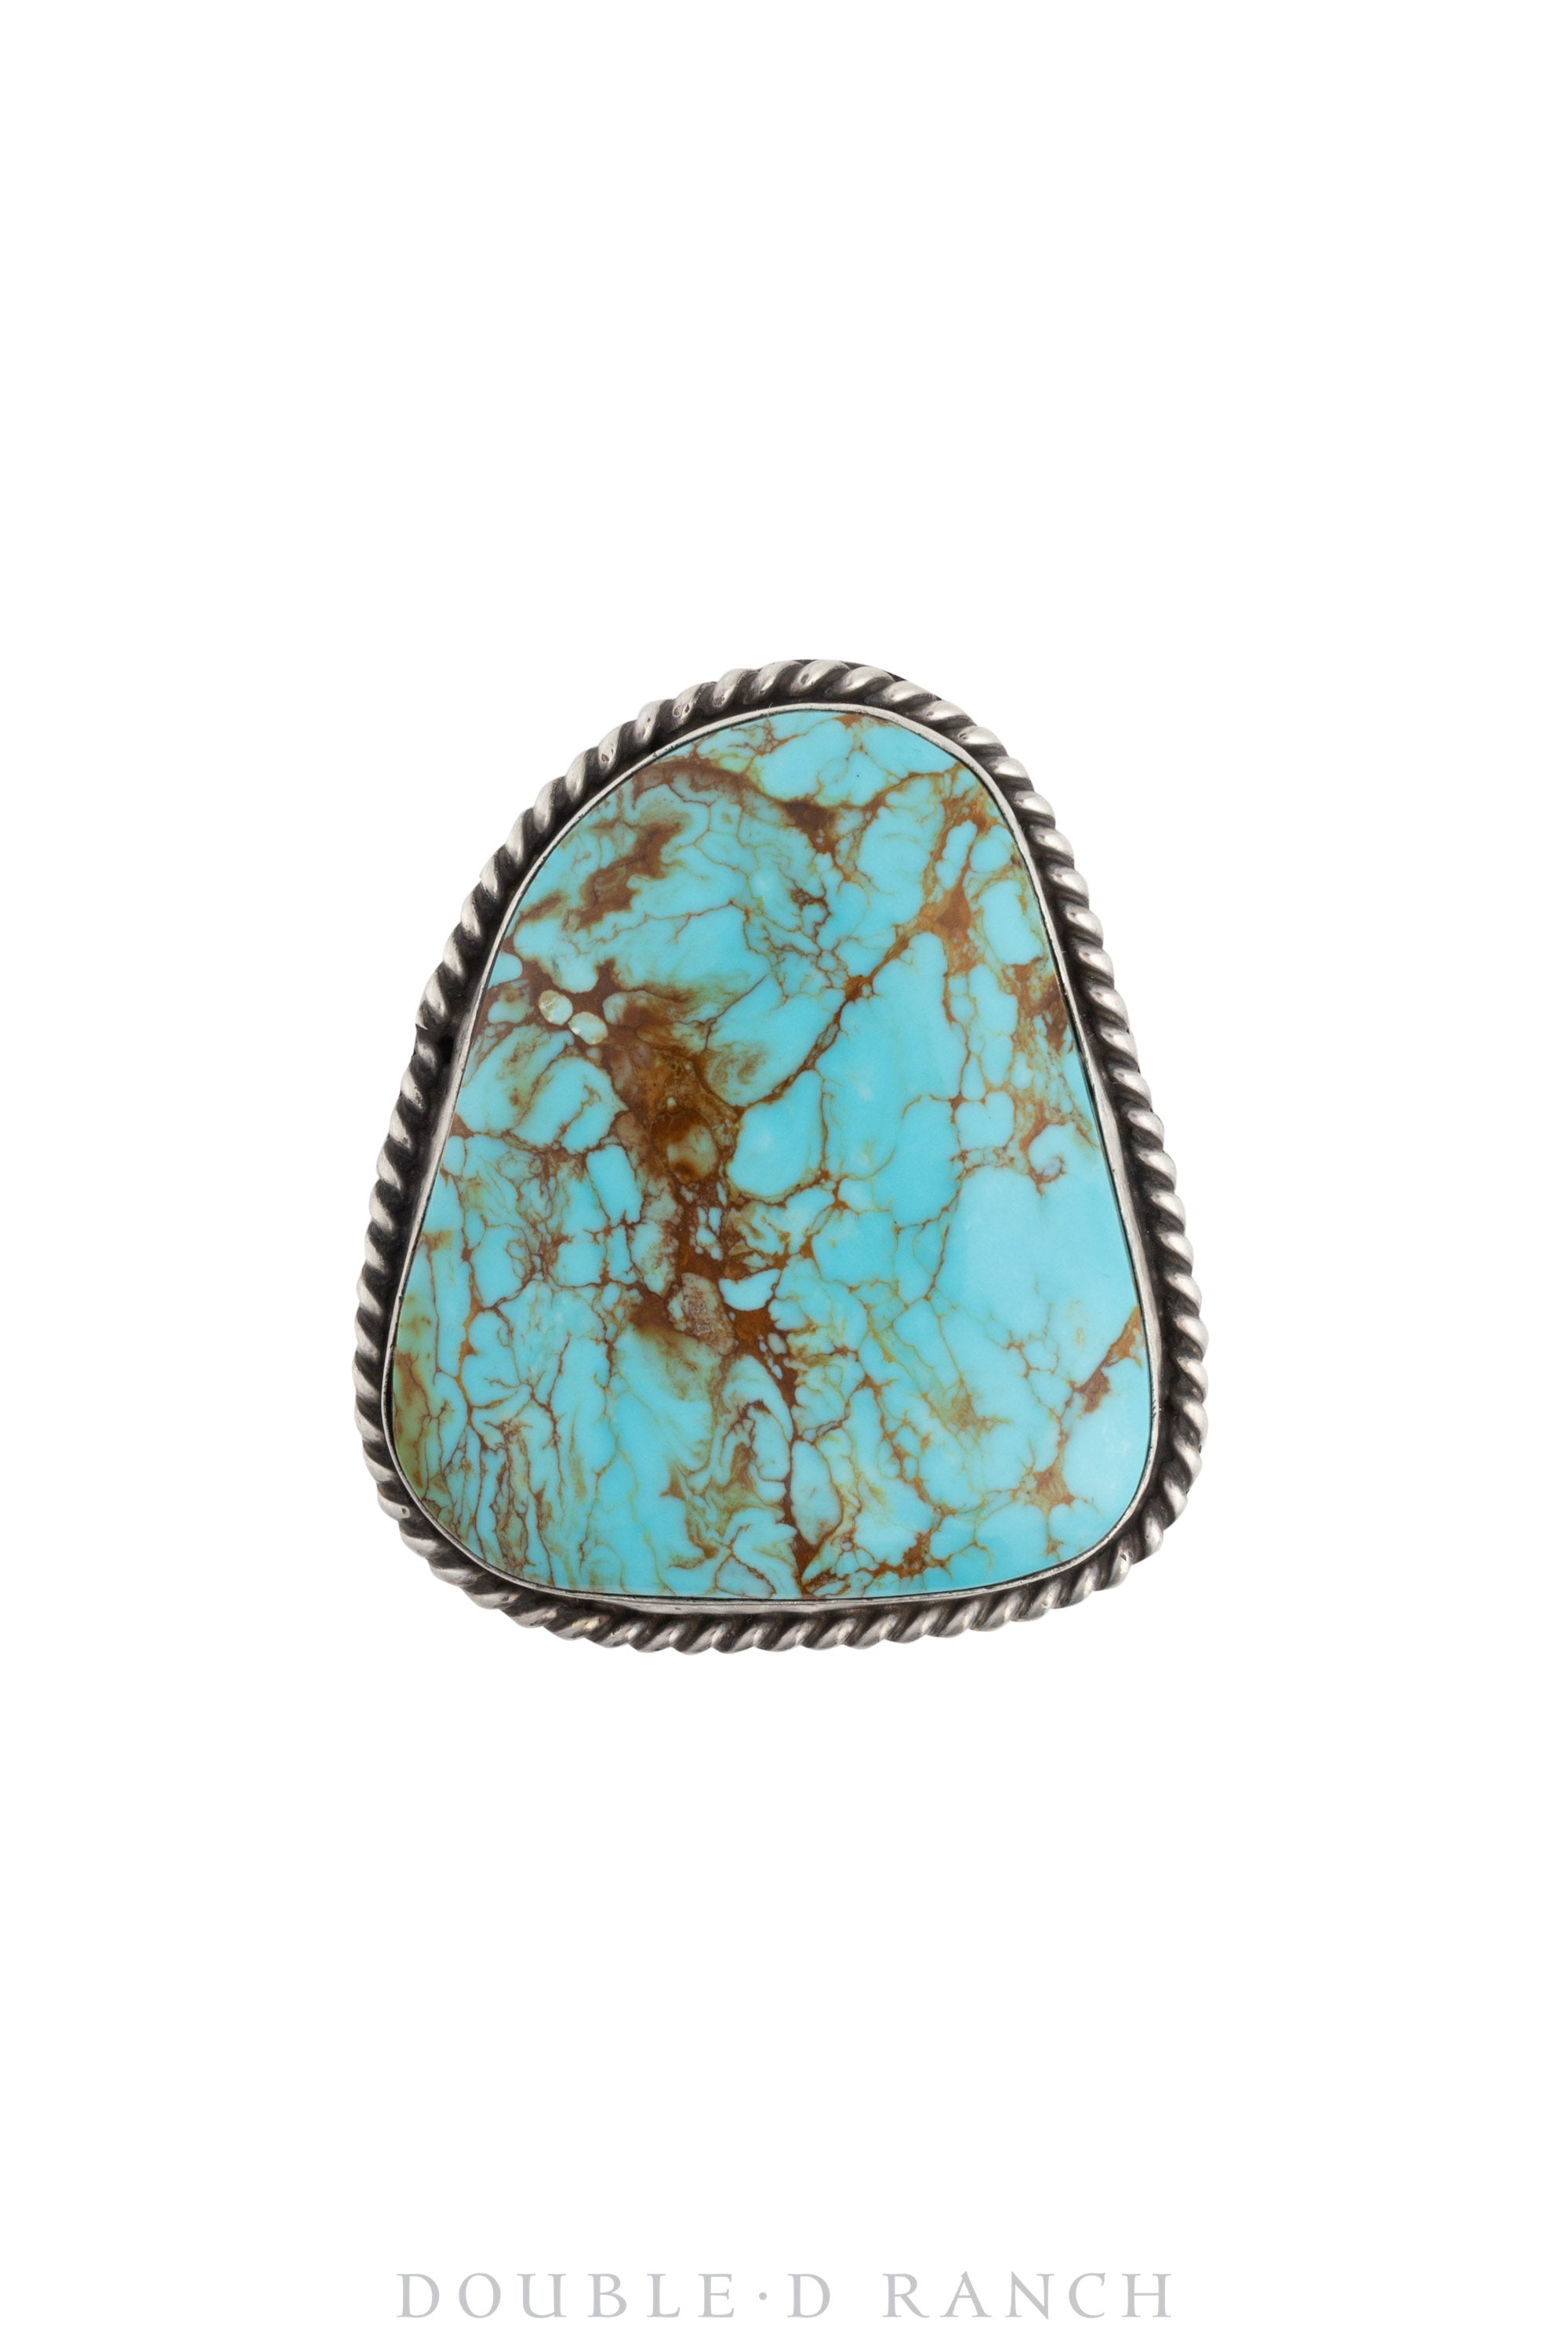 Ring, Natural Stone, Turquoise, Kingman, Hallmark, Contemporary, 1300